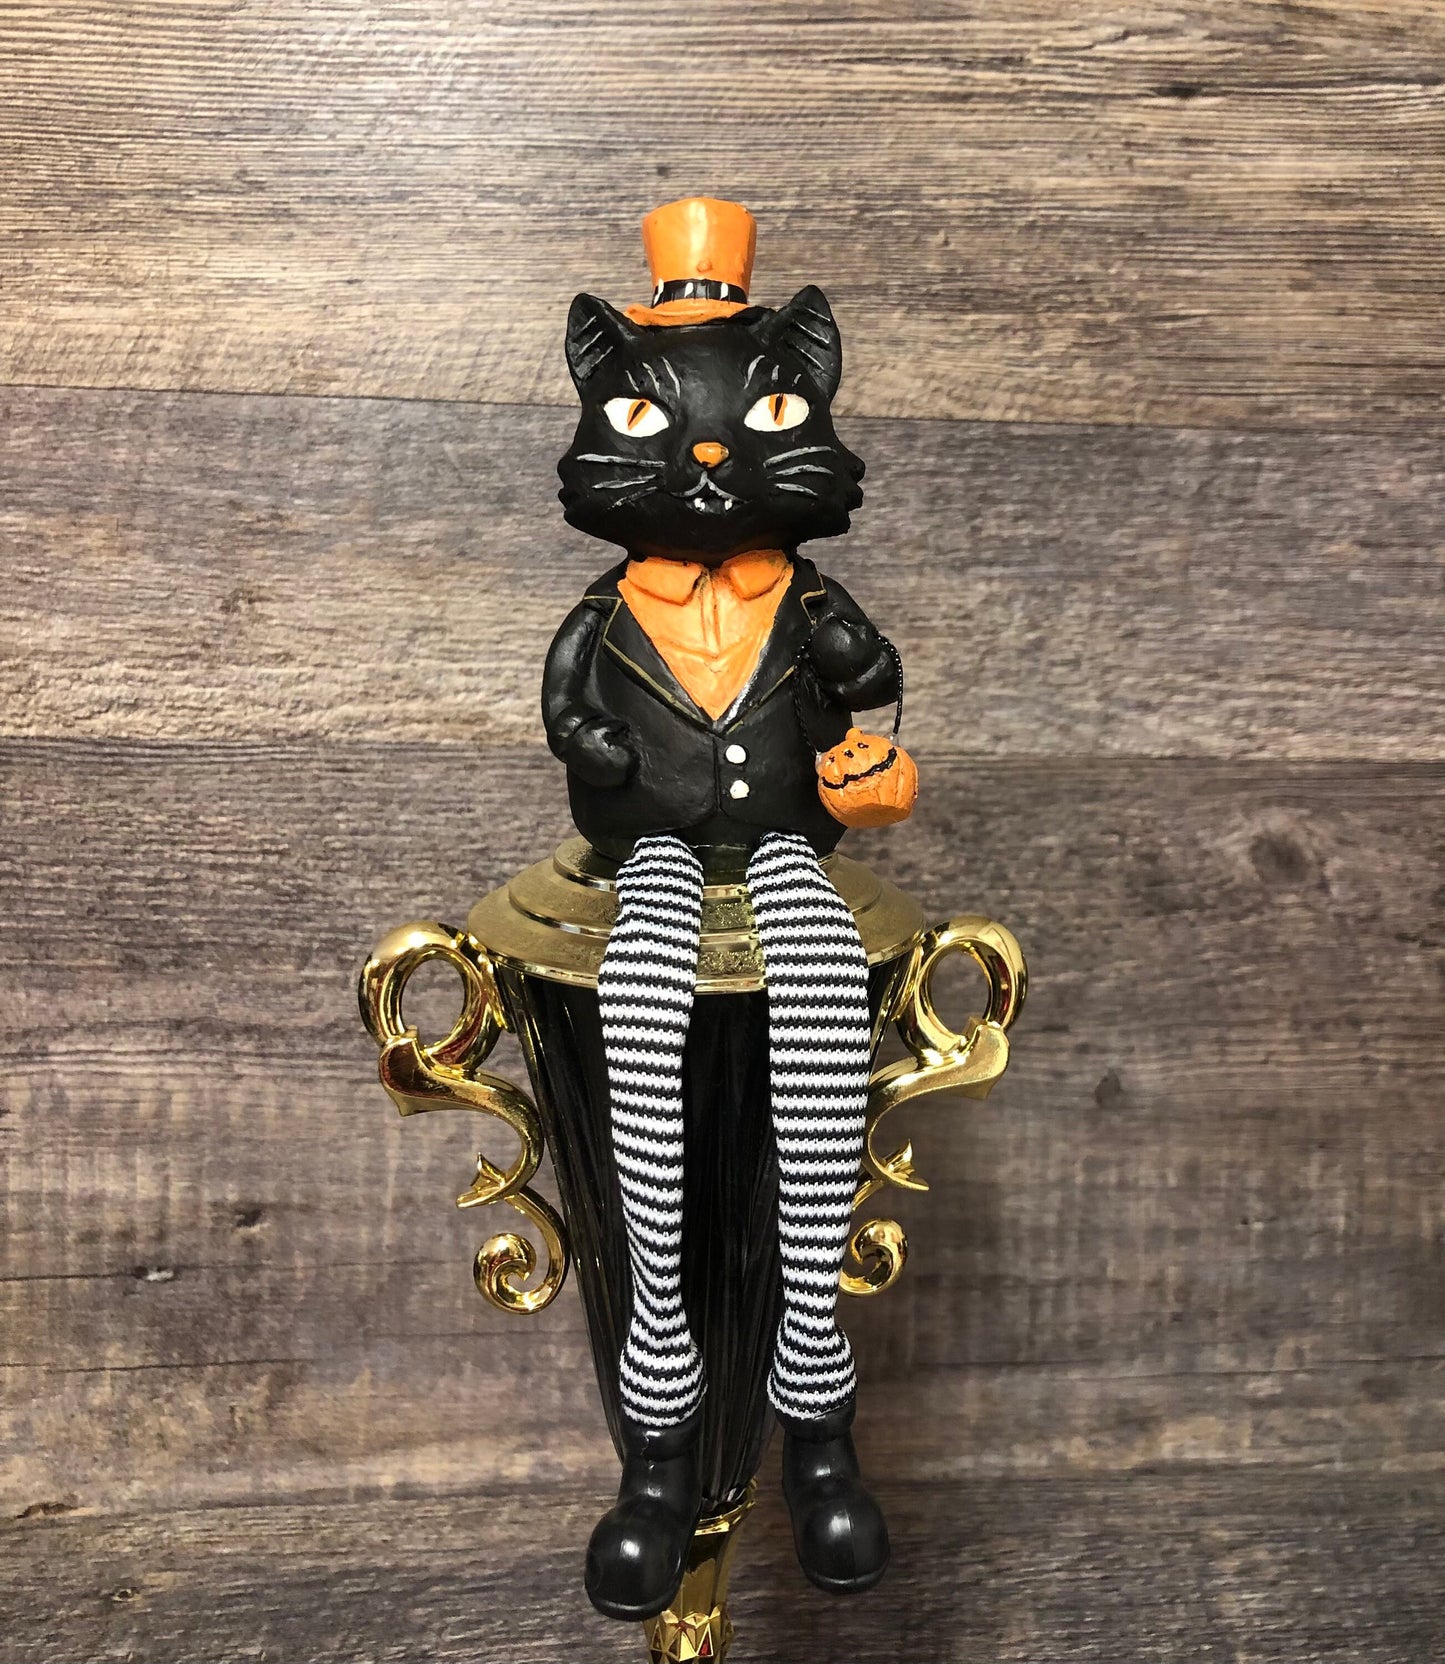 Halloween Trophy Black Cat Pumpkin Carving Contest Winner Costume Contest Black Bat Halloween Decor Jack O Lantern Trunk Or Treat Pumpkin